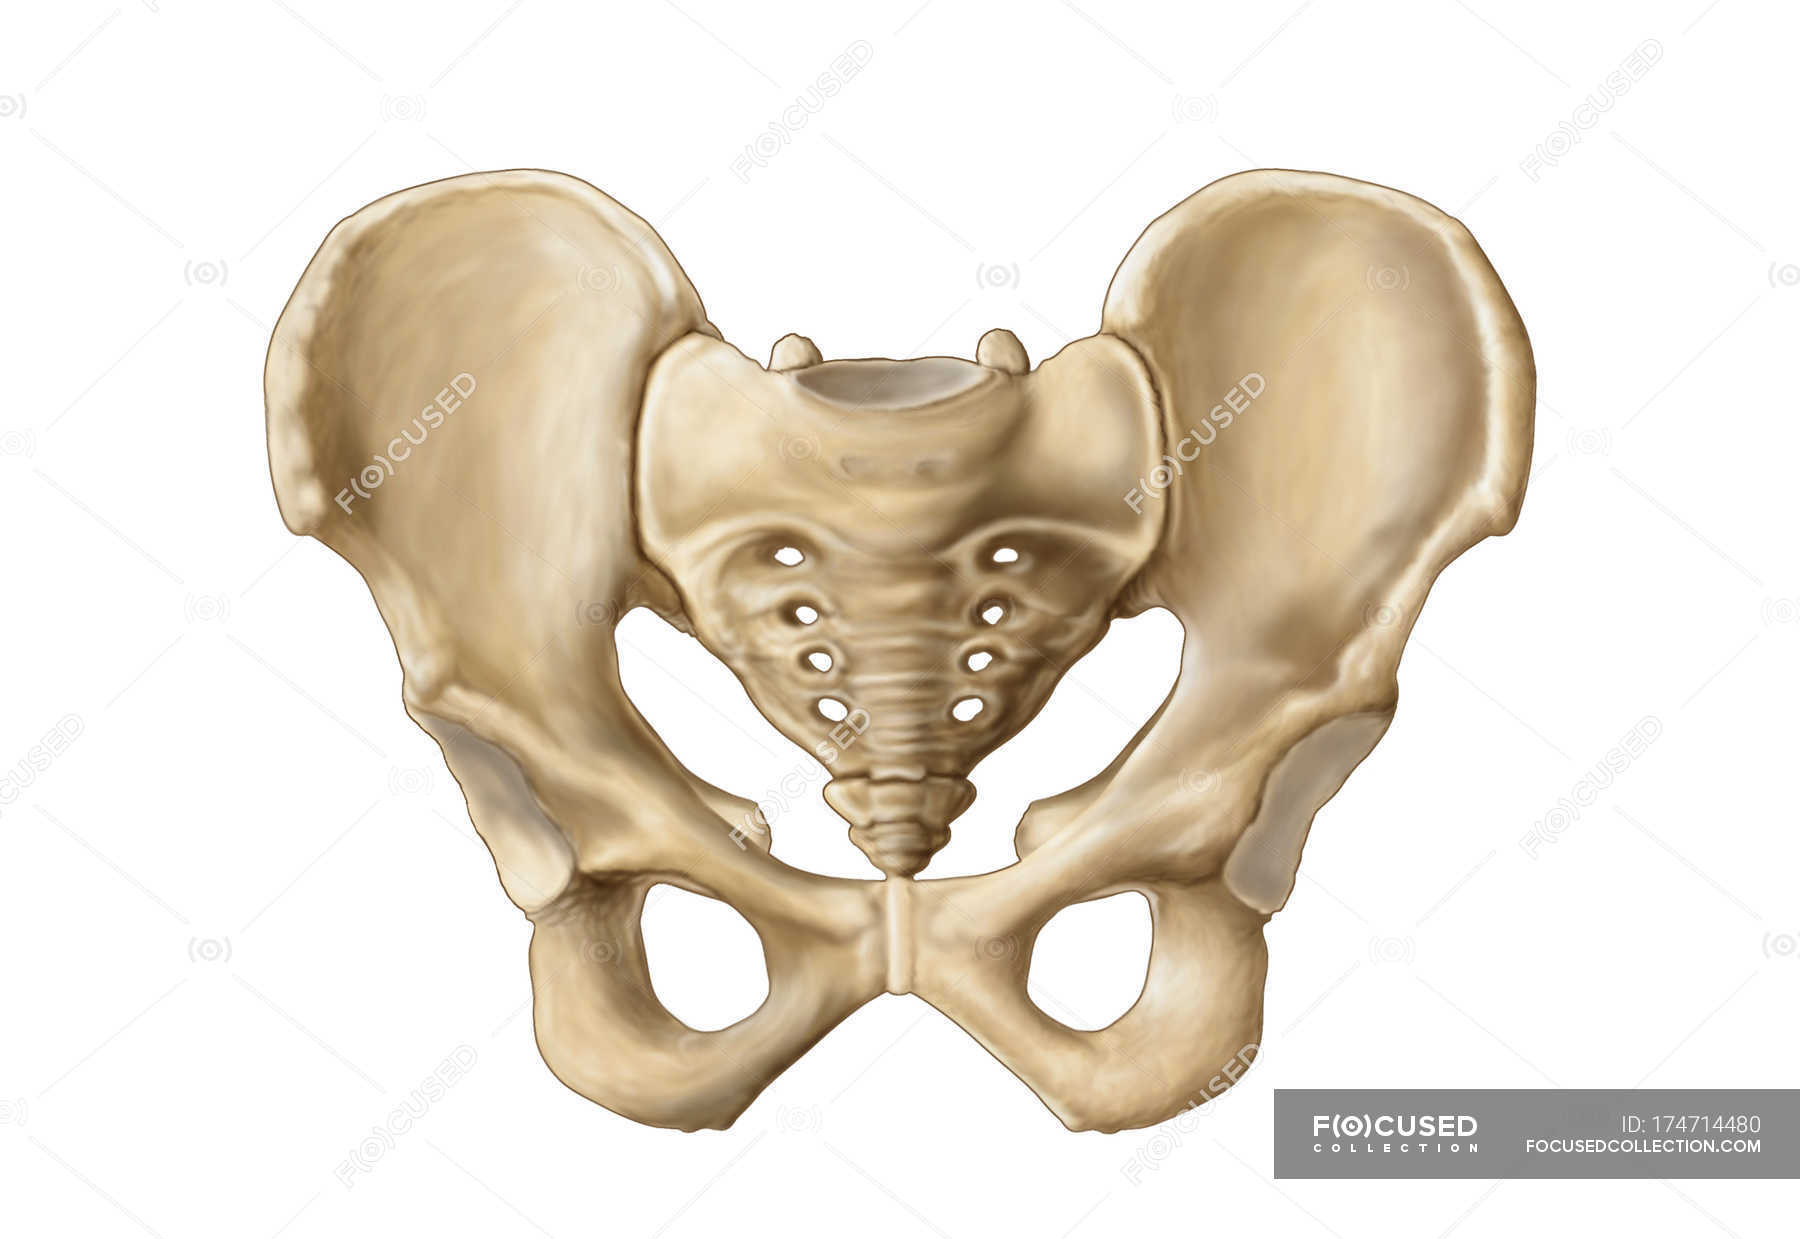 Medical illustration of human pelvic bone anatomy — symphysis, three